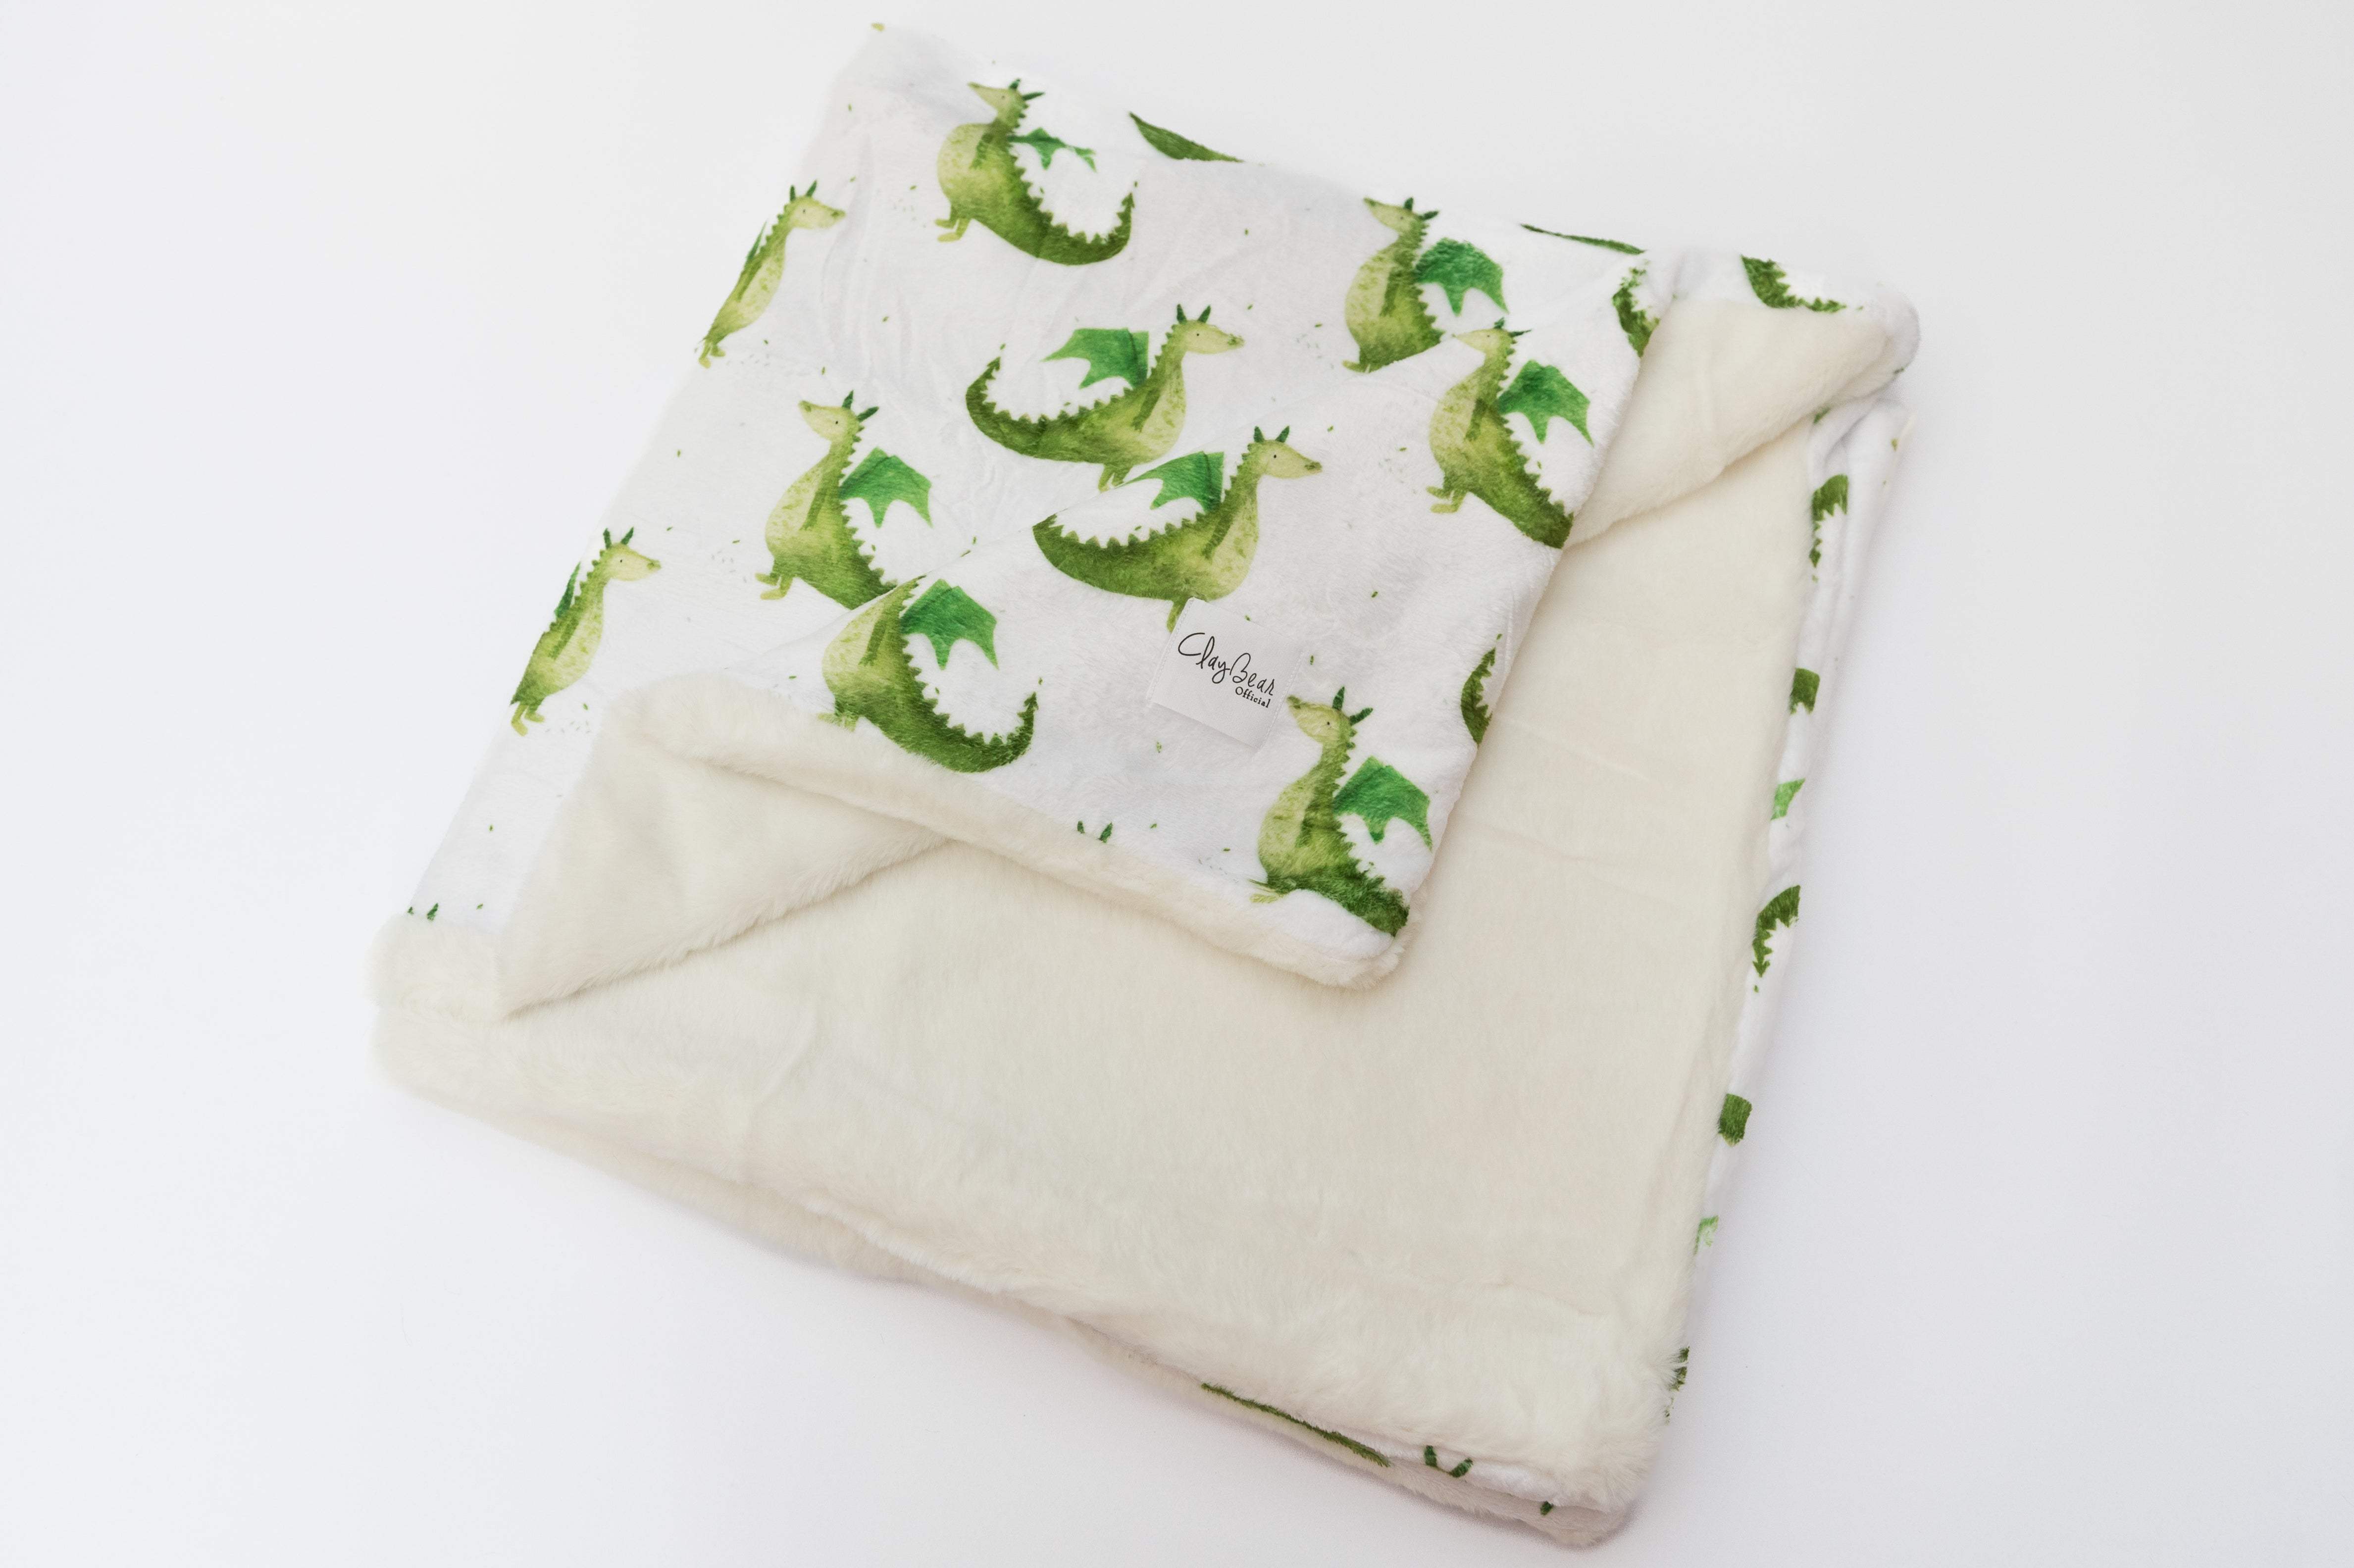 Green Dragon Blanket